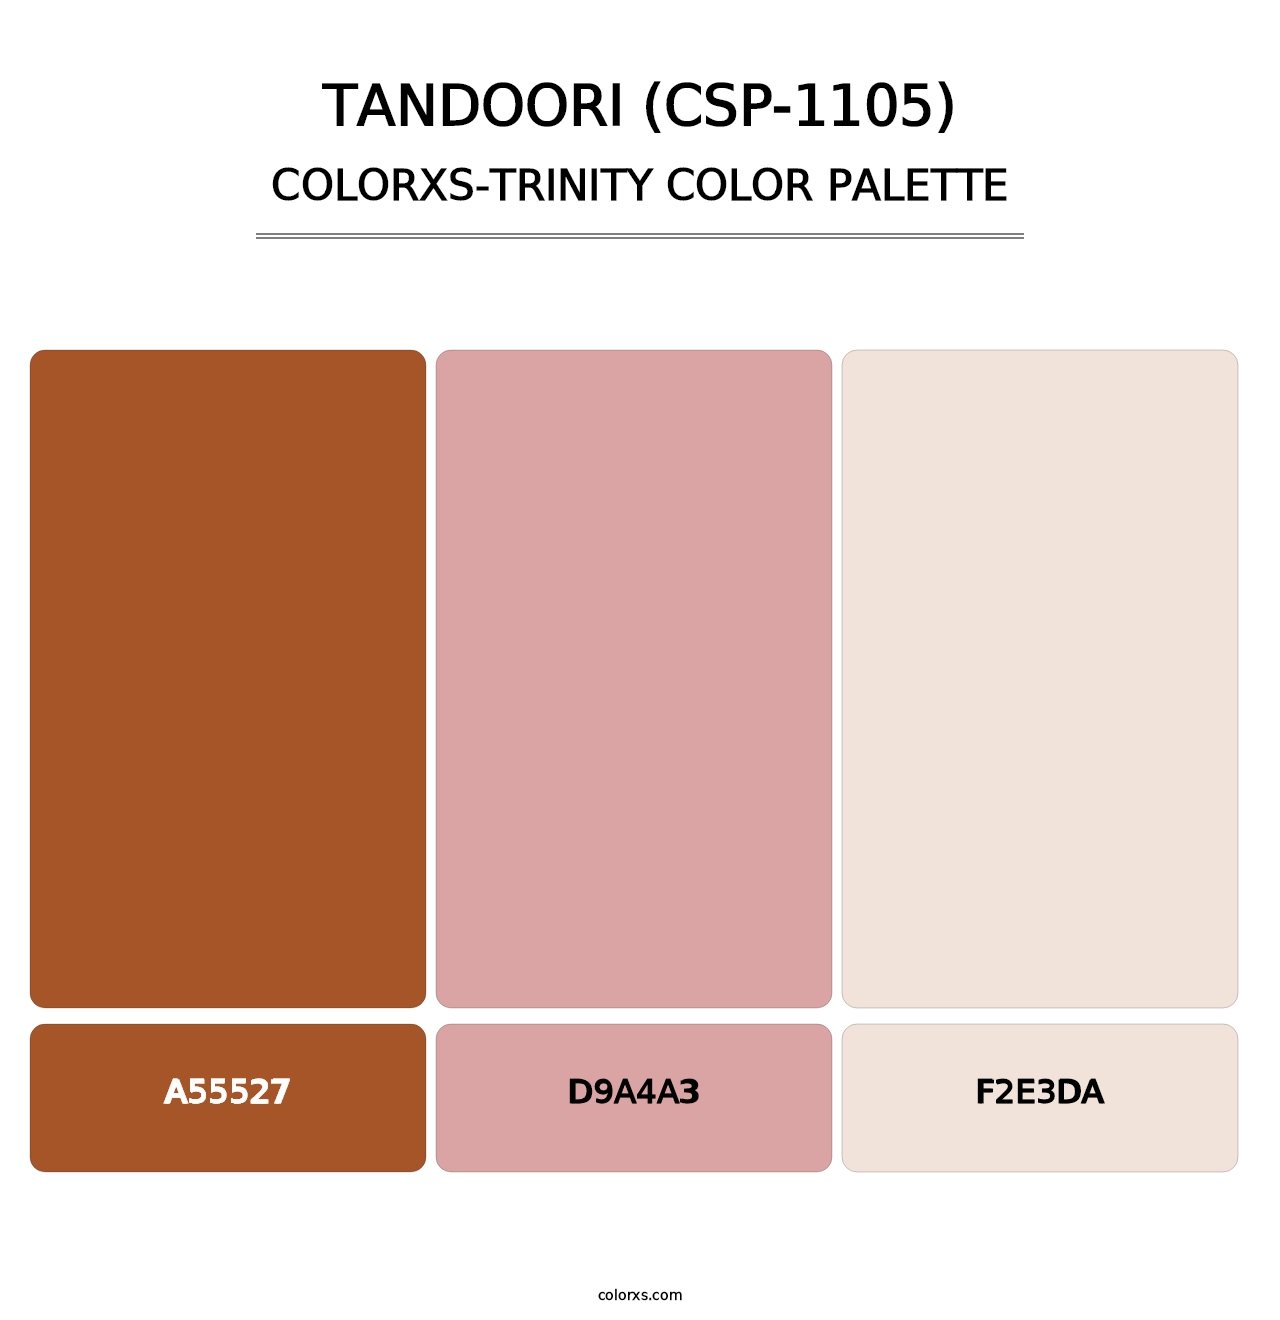 Tandoori (CSP-1105) - Colorxs Trinity Palette